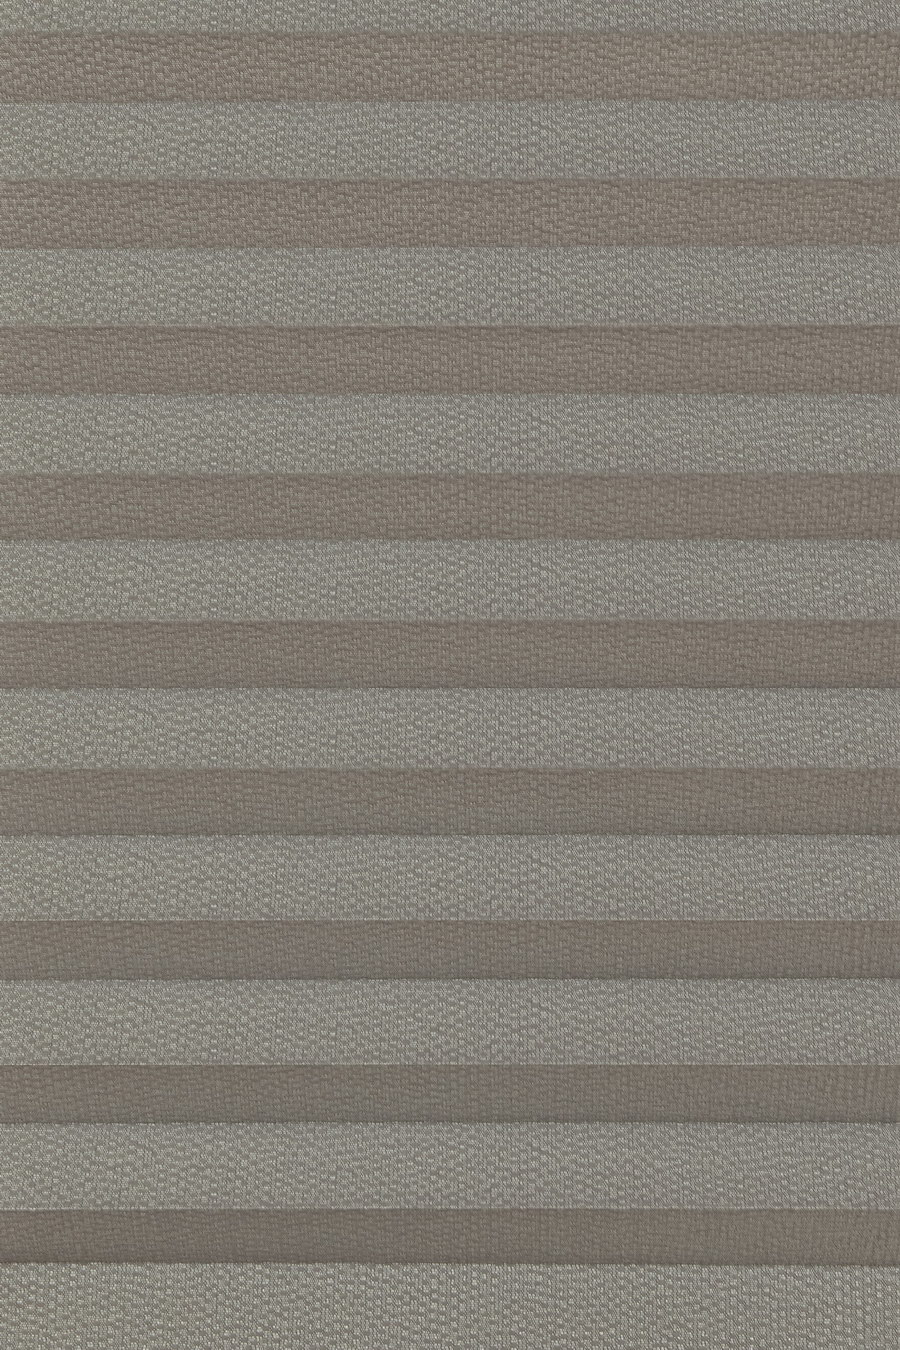 Ткань MERISA grey-stone 30611 для штор плиссе